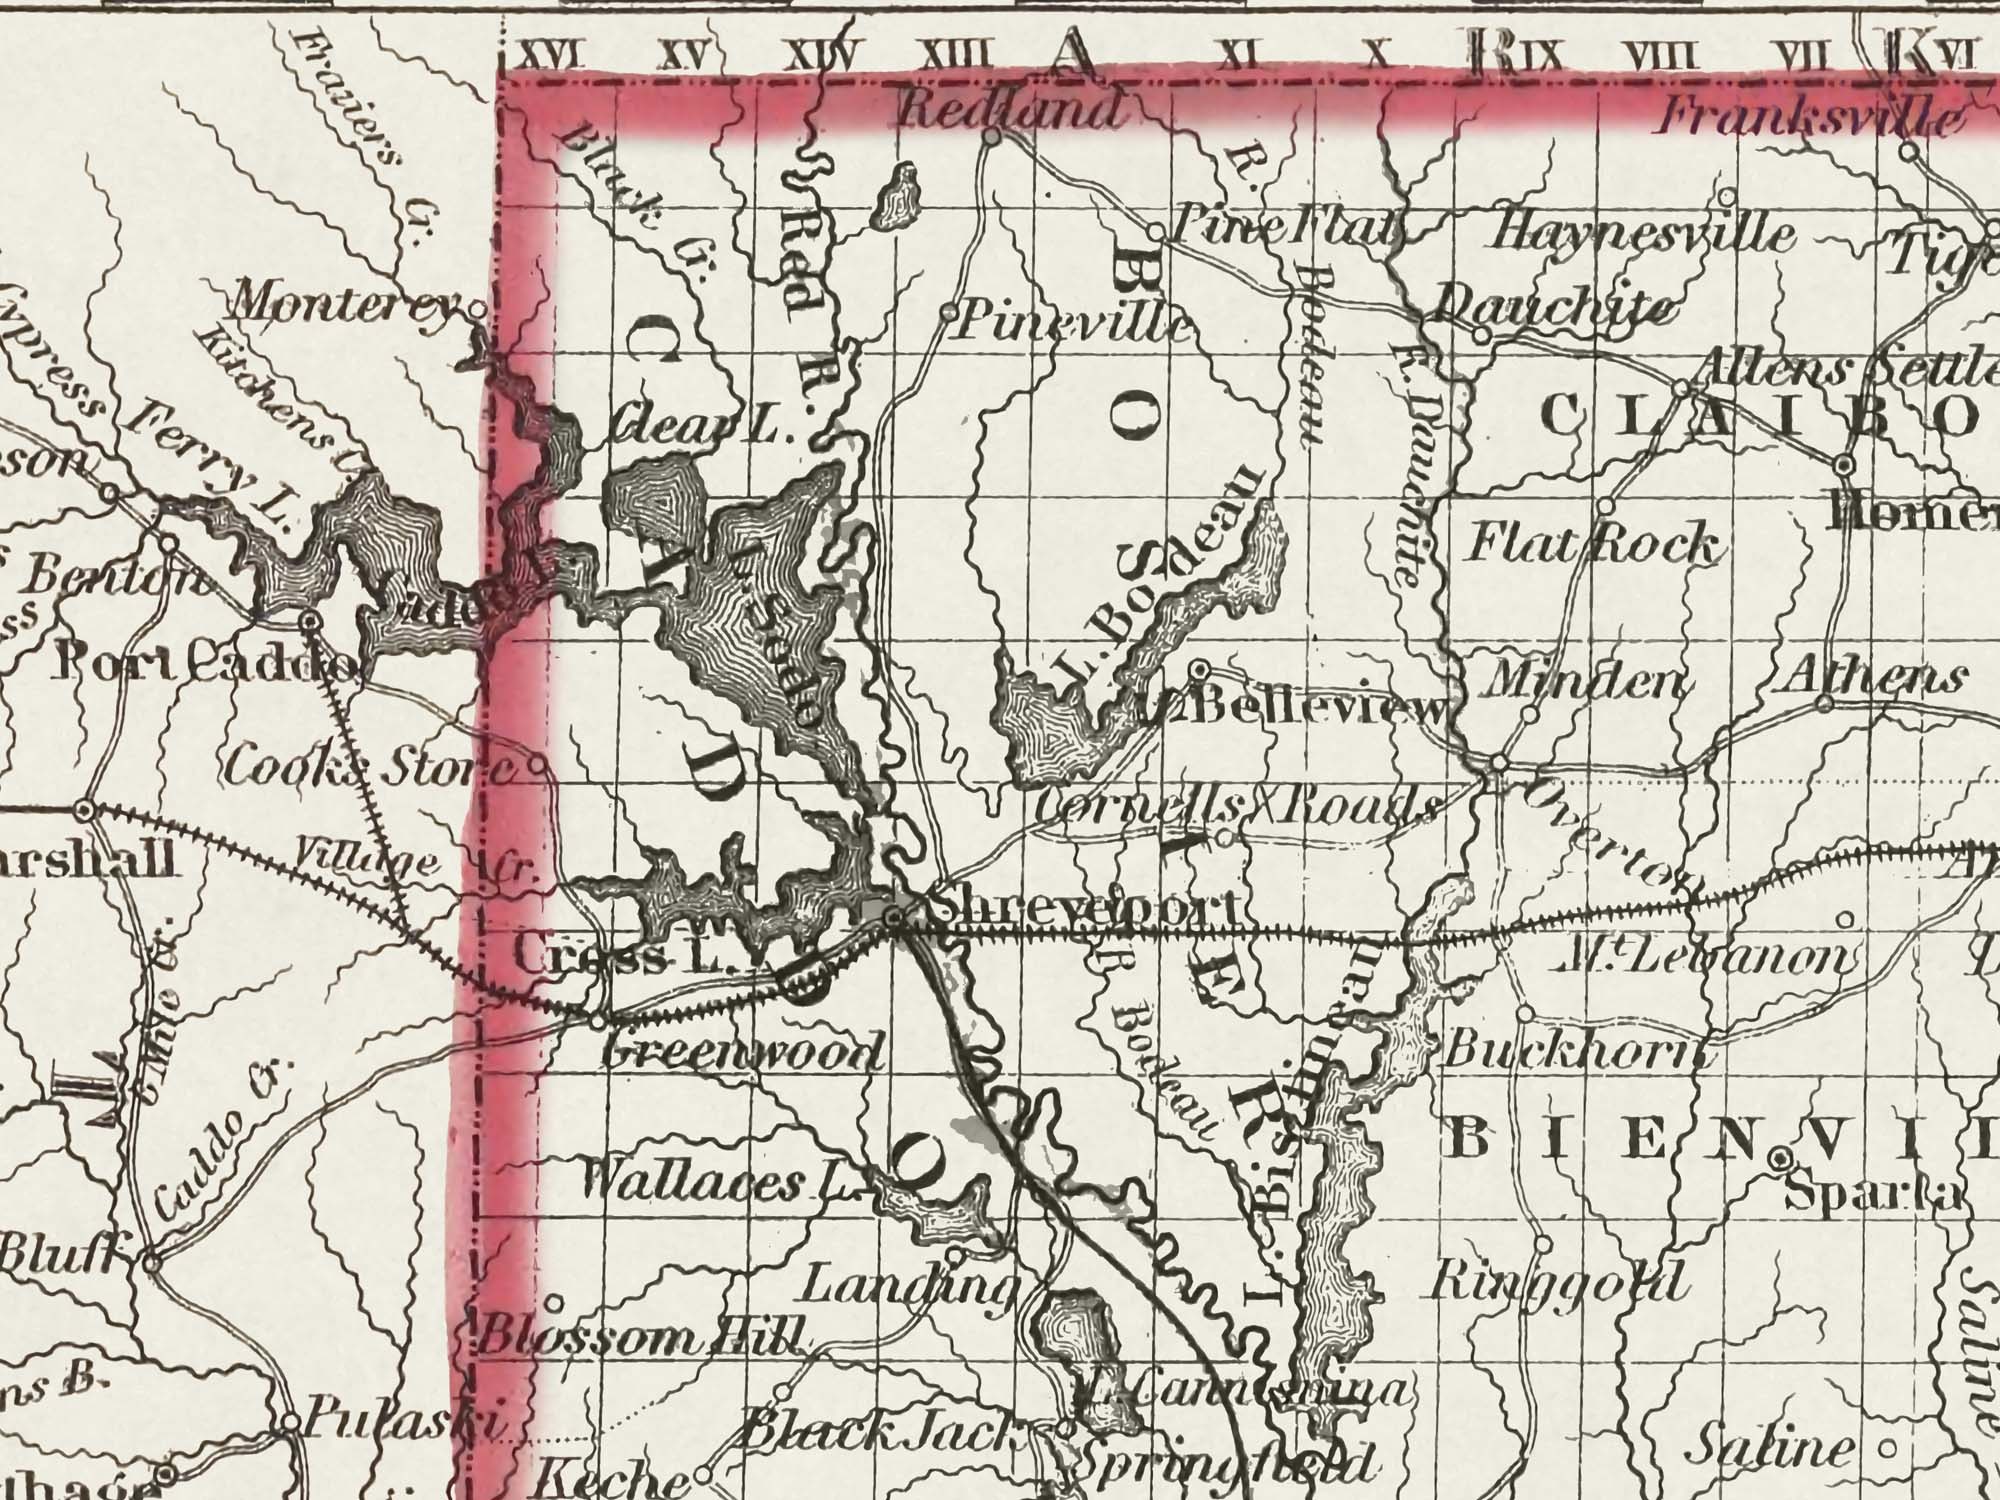 Vintage Louisiana State Map